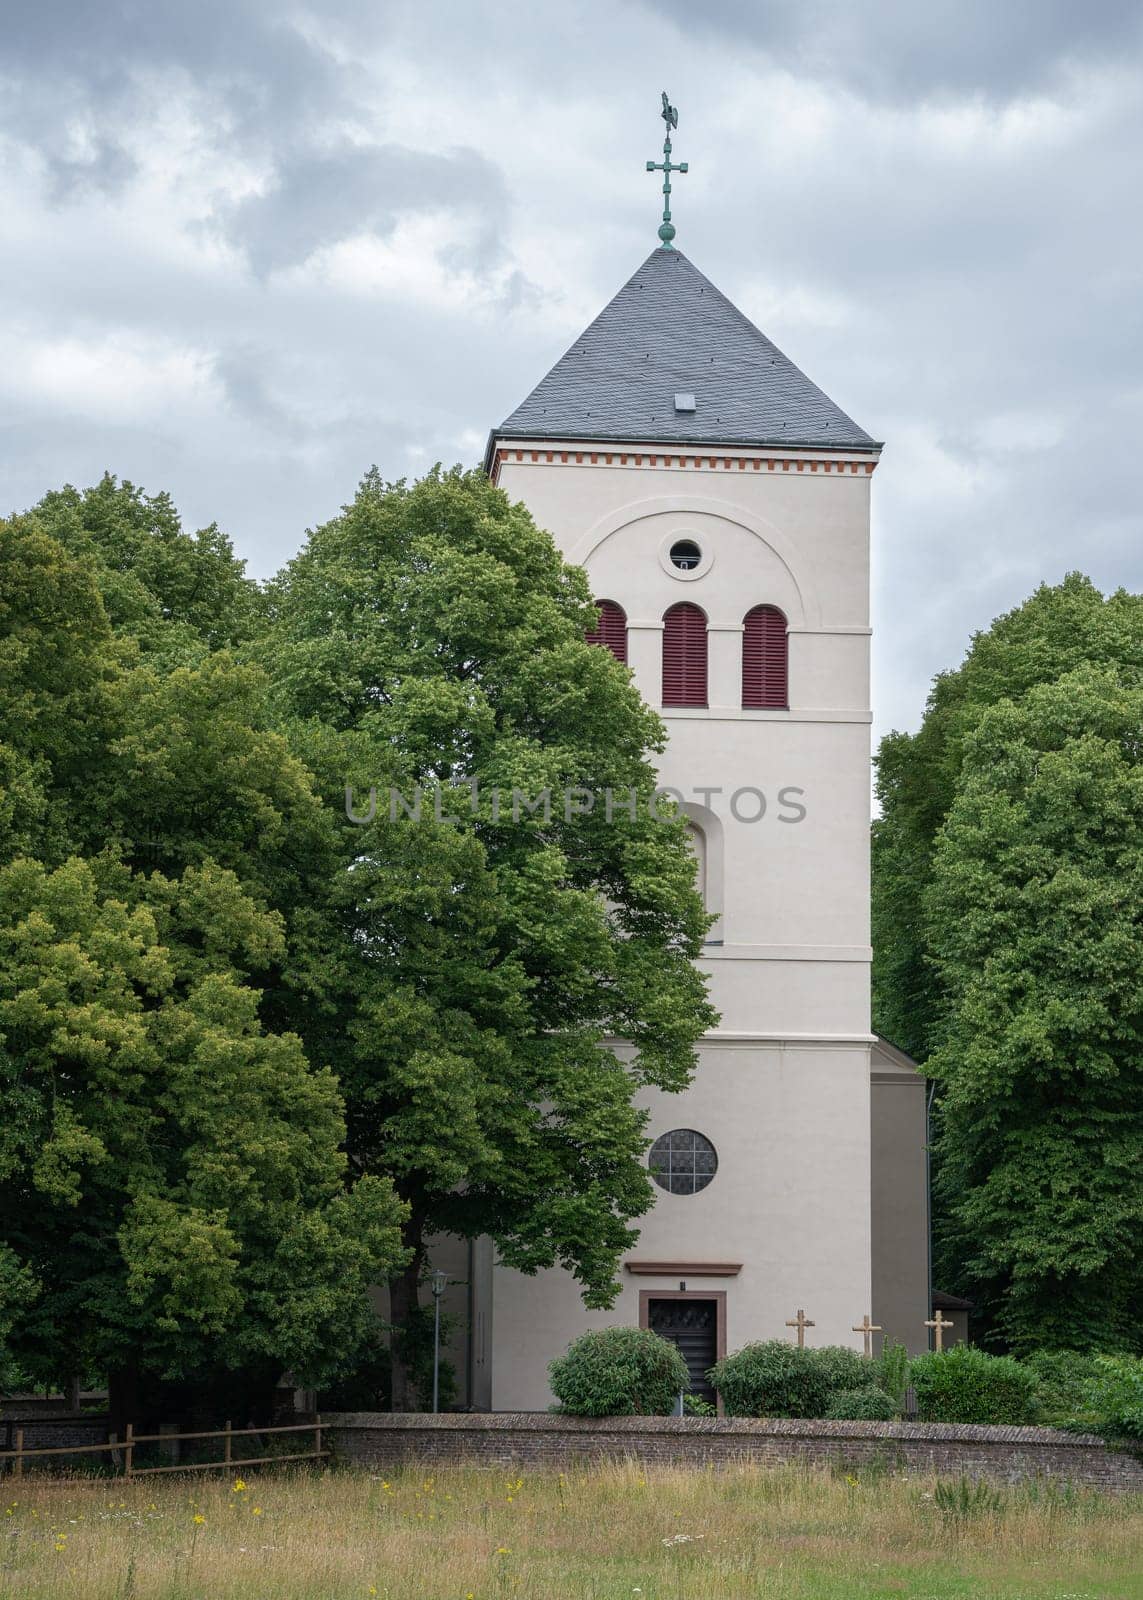 Parish Church Saint Gereon, Cologne, Germany by alfotokunst